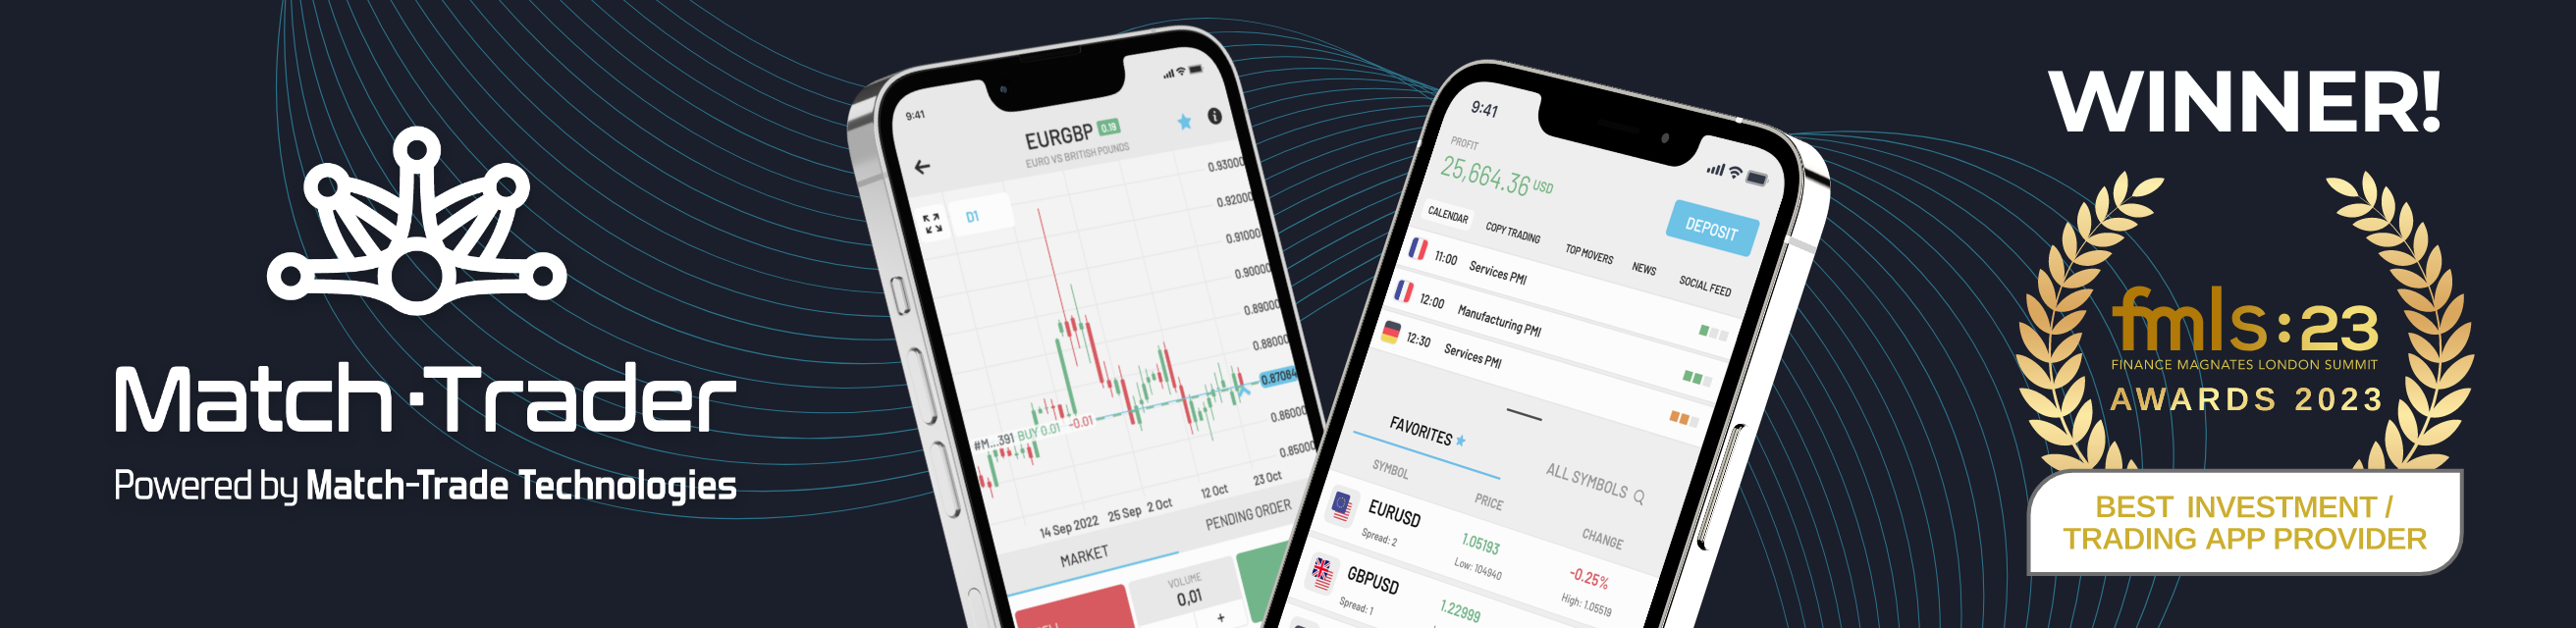 Match-trader platform image